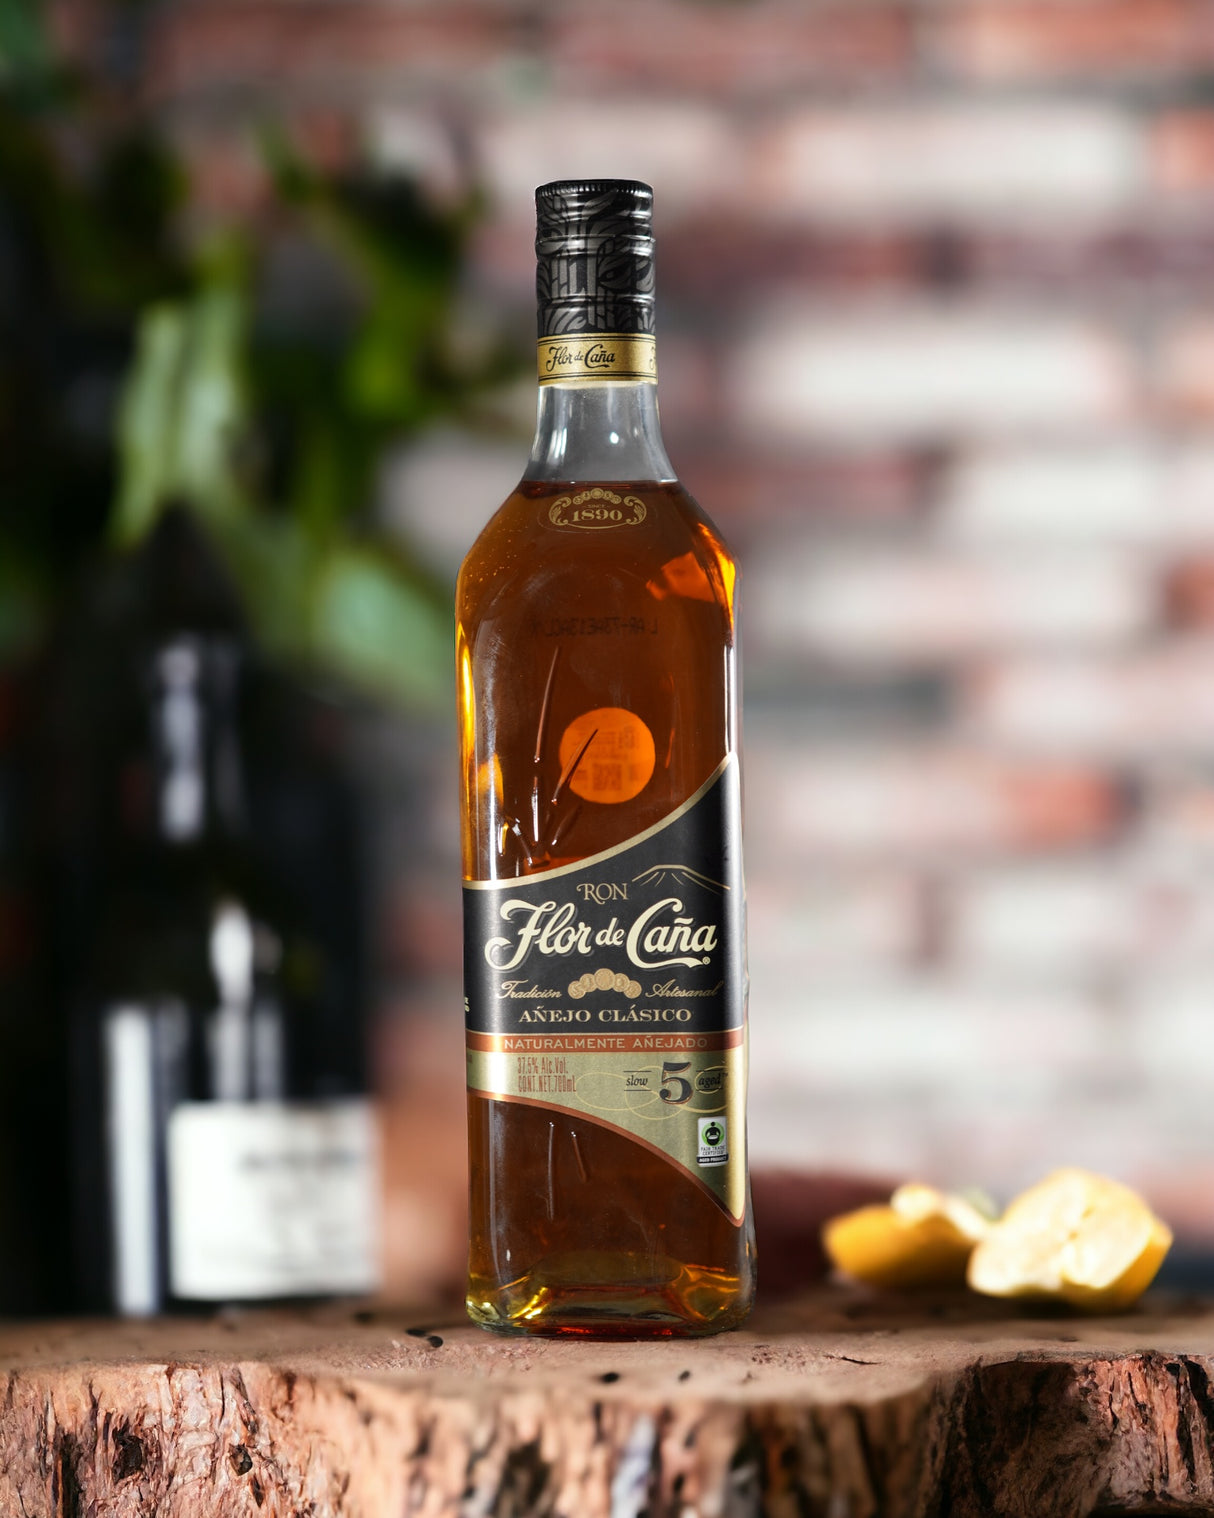 Flor de Caña Aged Classic Rum 5 years